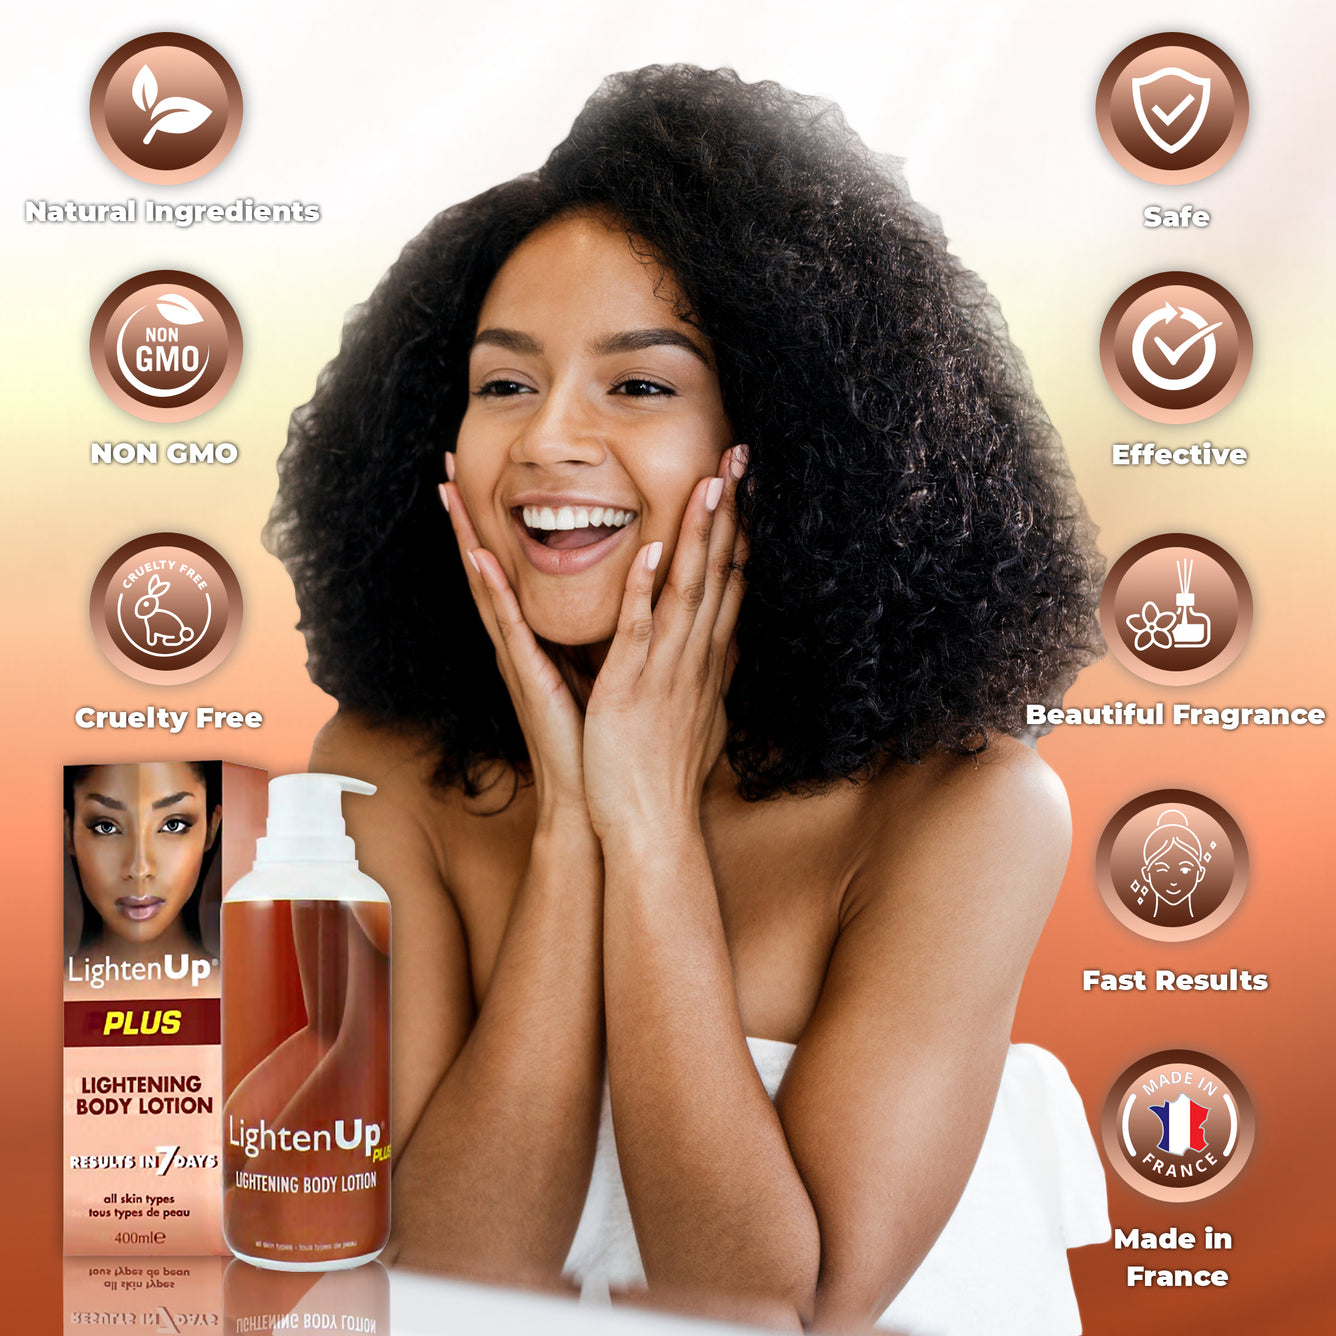 Omic LightenUp PLUS Lightening Body Lotion - 400ml LightenUp - Mitchell Brands - Skin Lightening, Skin Brightening, Fade Dark Spots, Shea Butter, Hair Growth Products